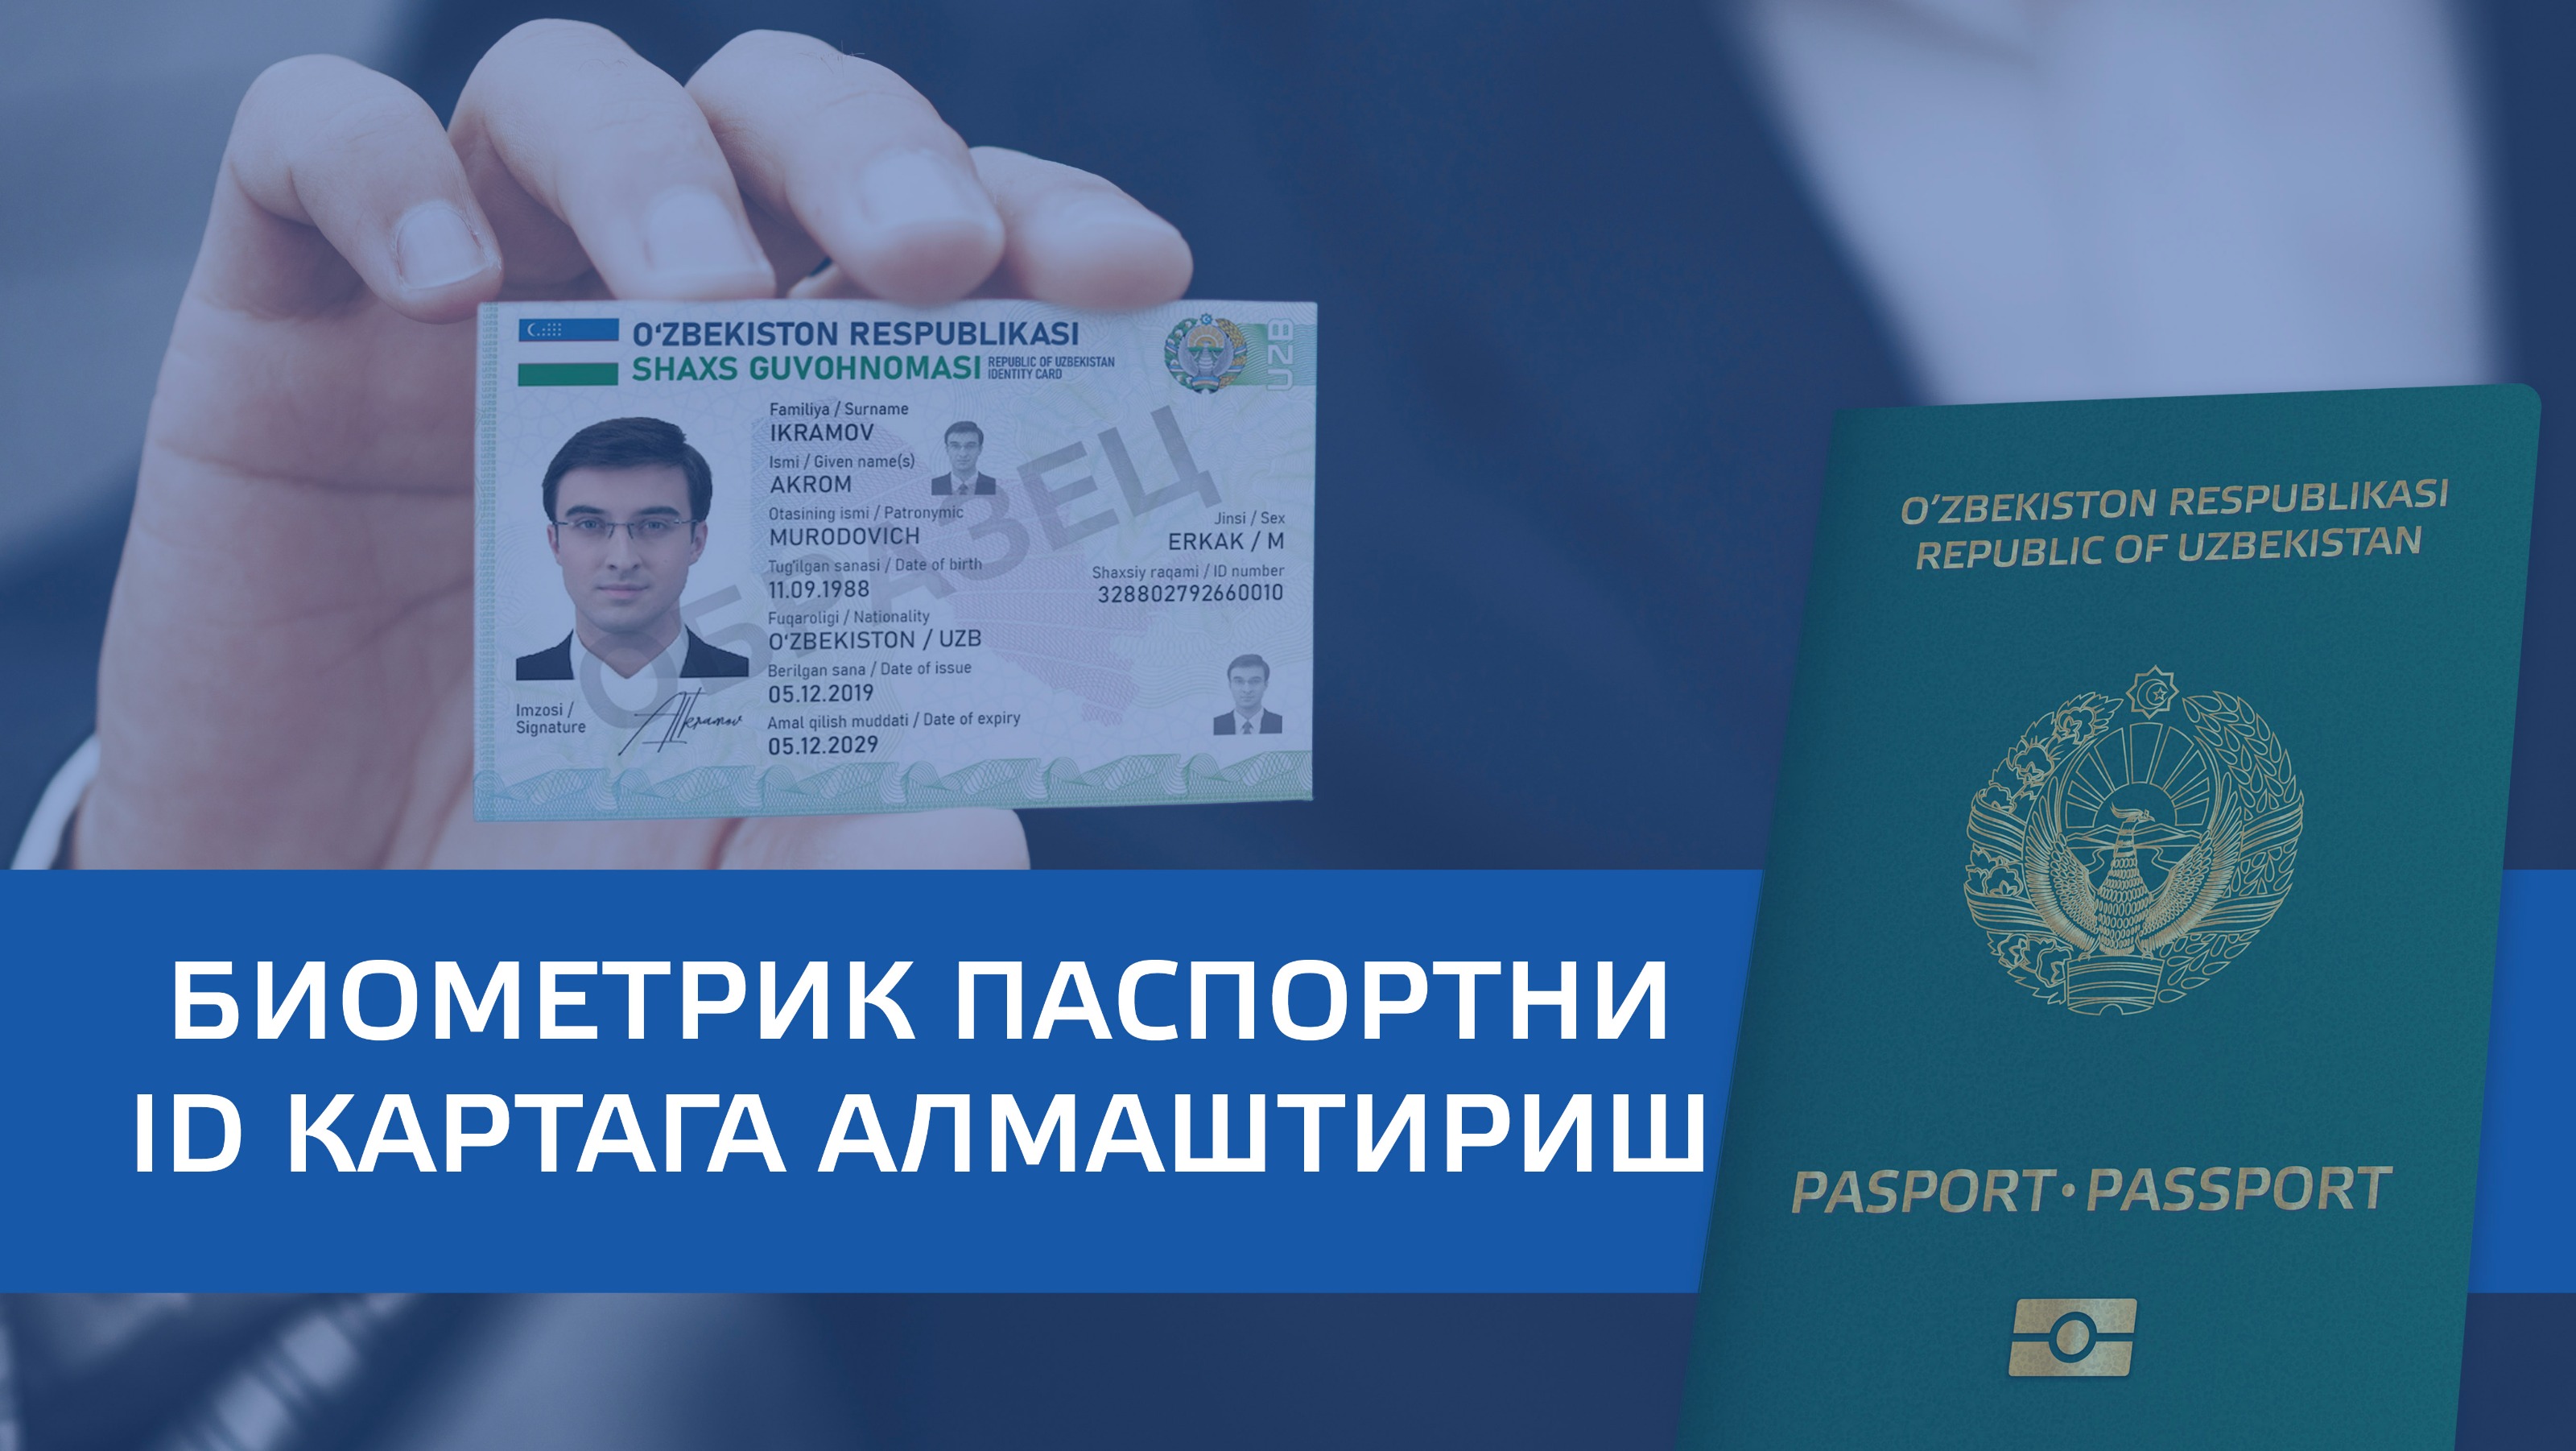 Паспортни ID картага алмаштириш ва онлайн тўловларни амалга ошириш